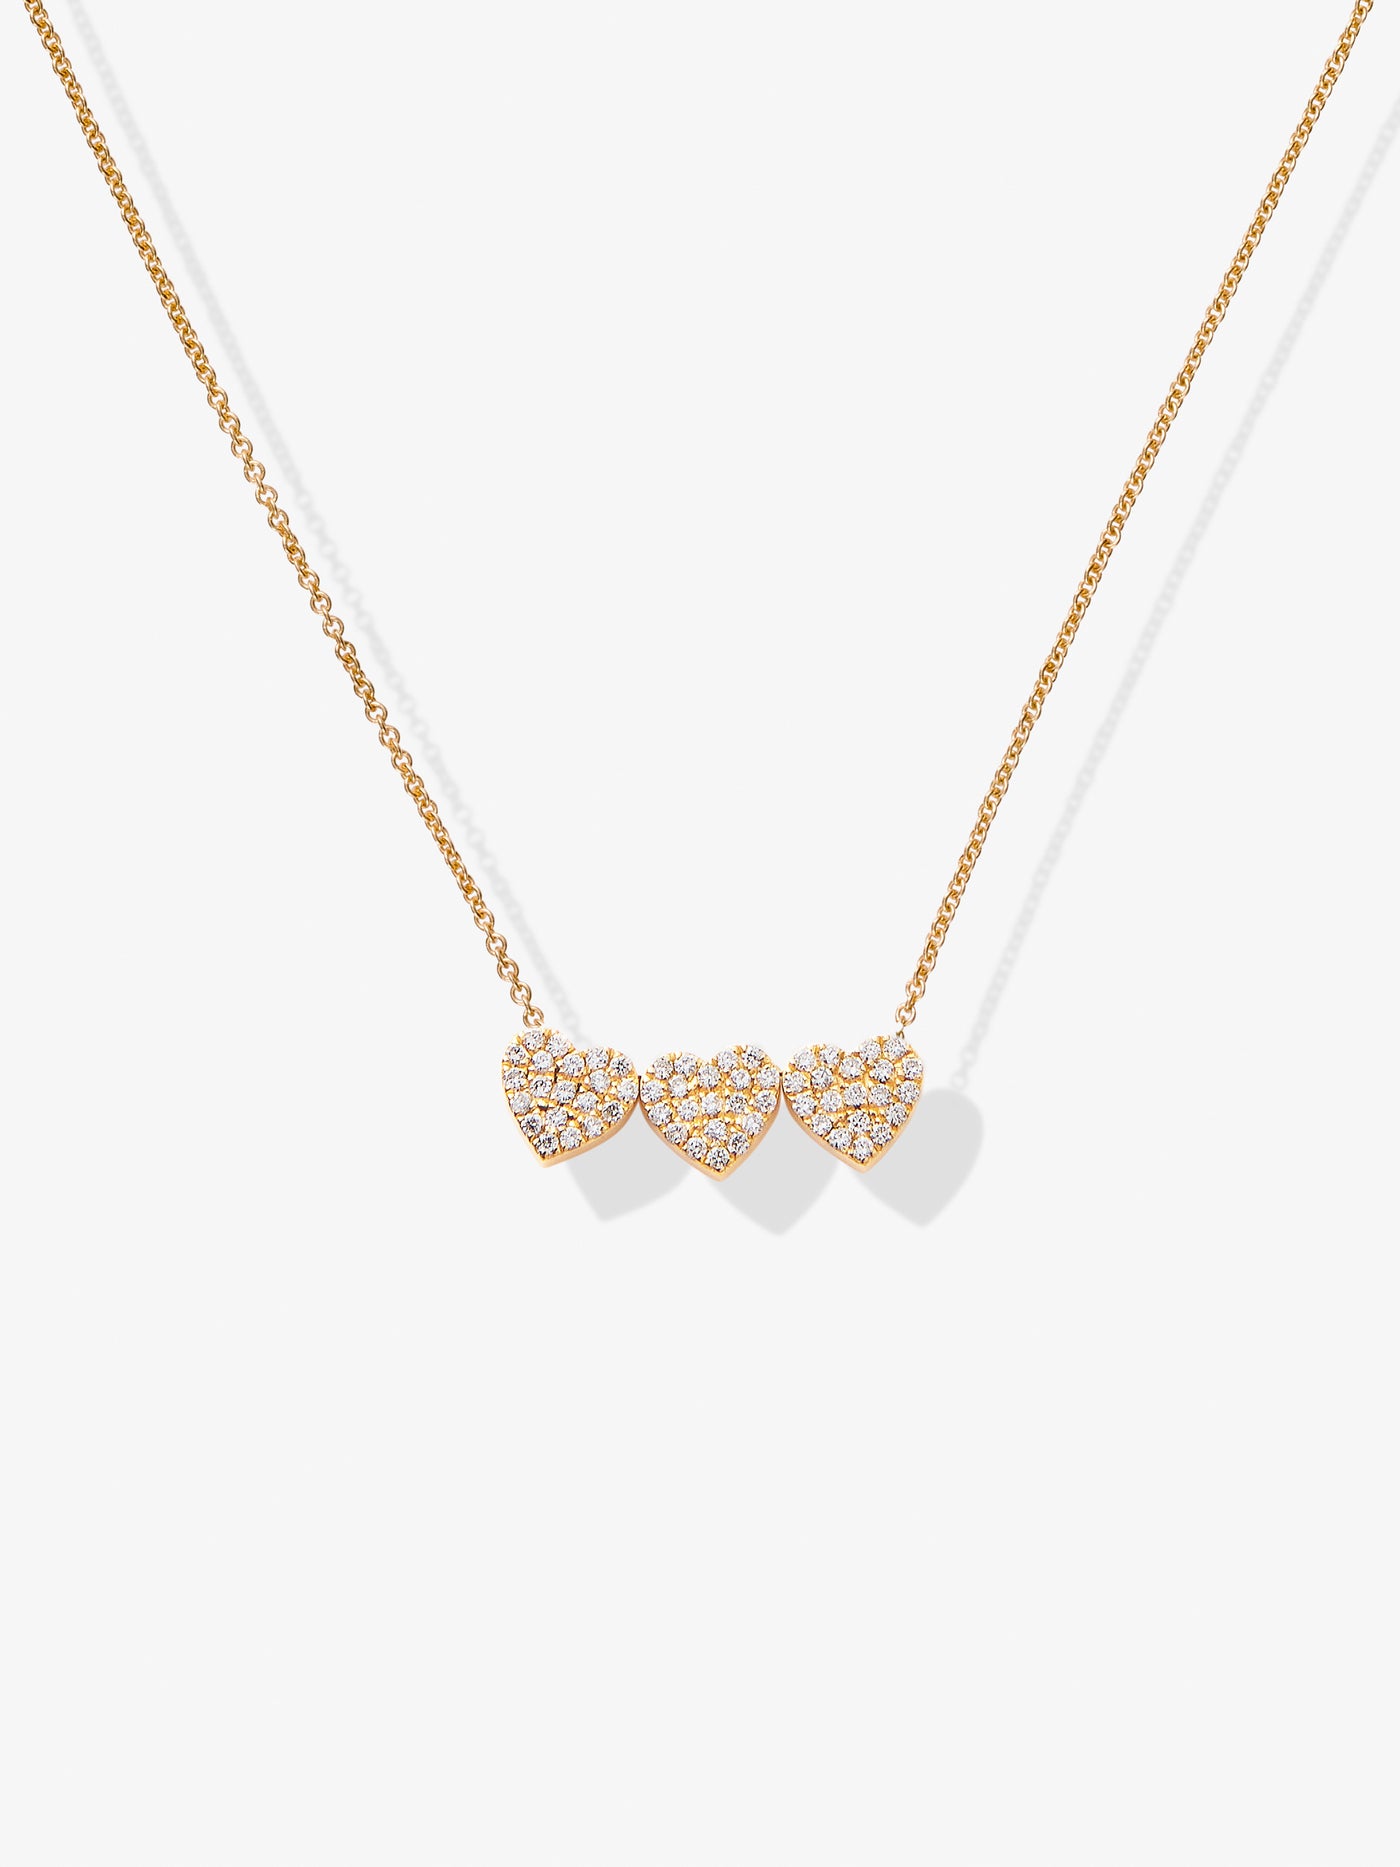 Three Diamond Hearts 18-Karat Gold Necklace